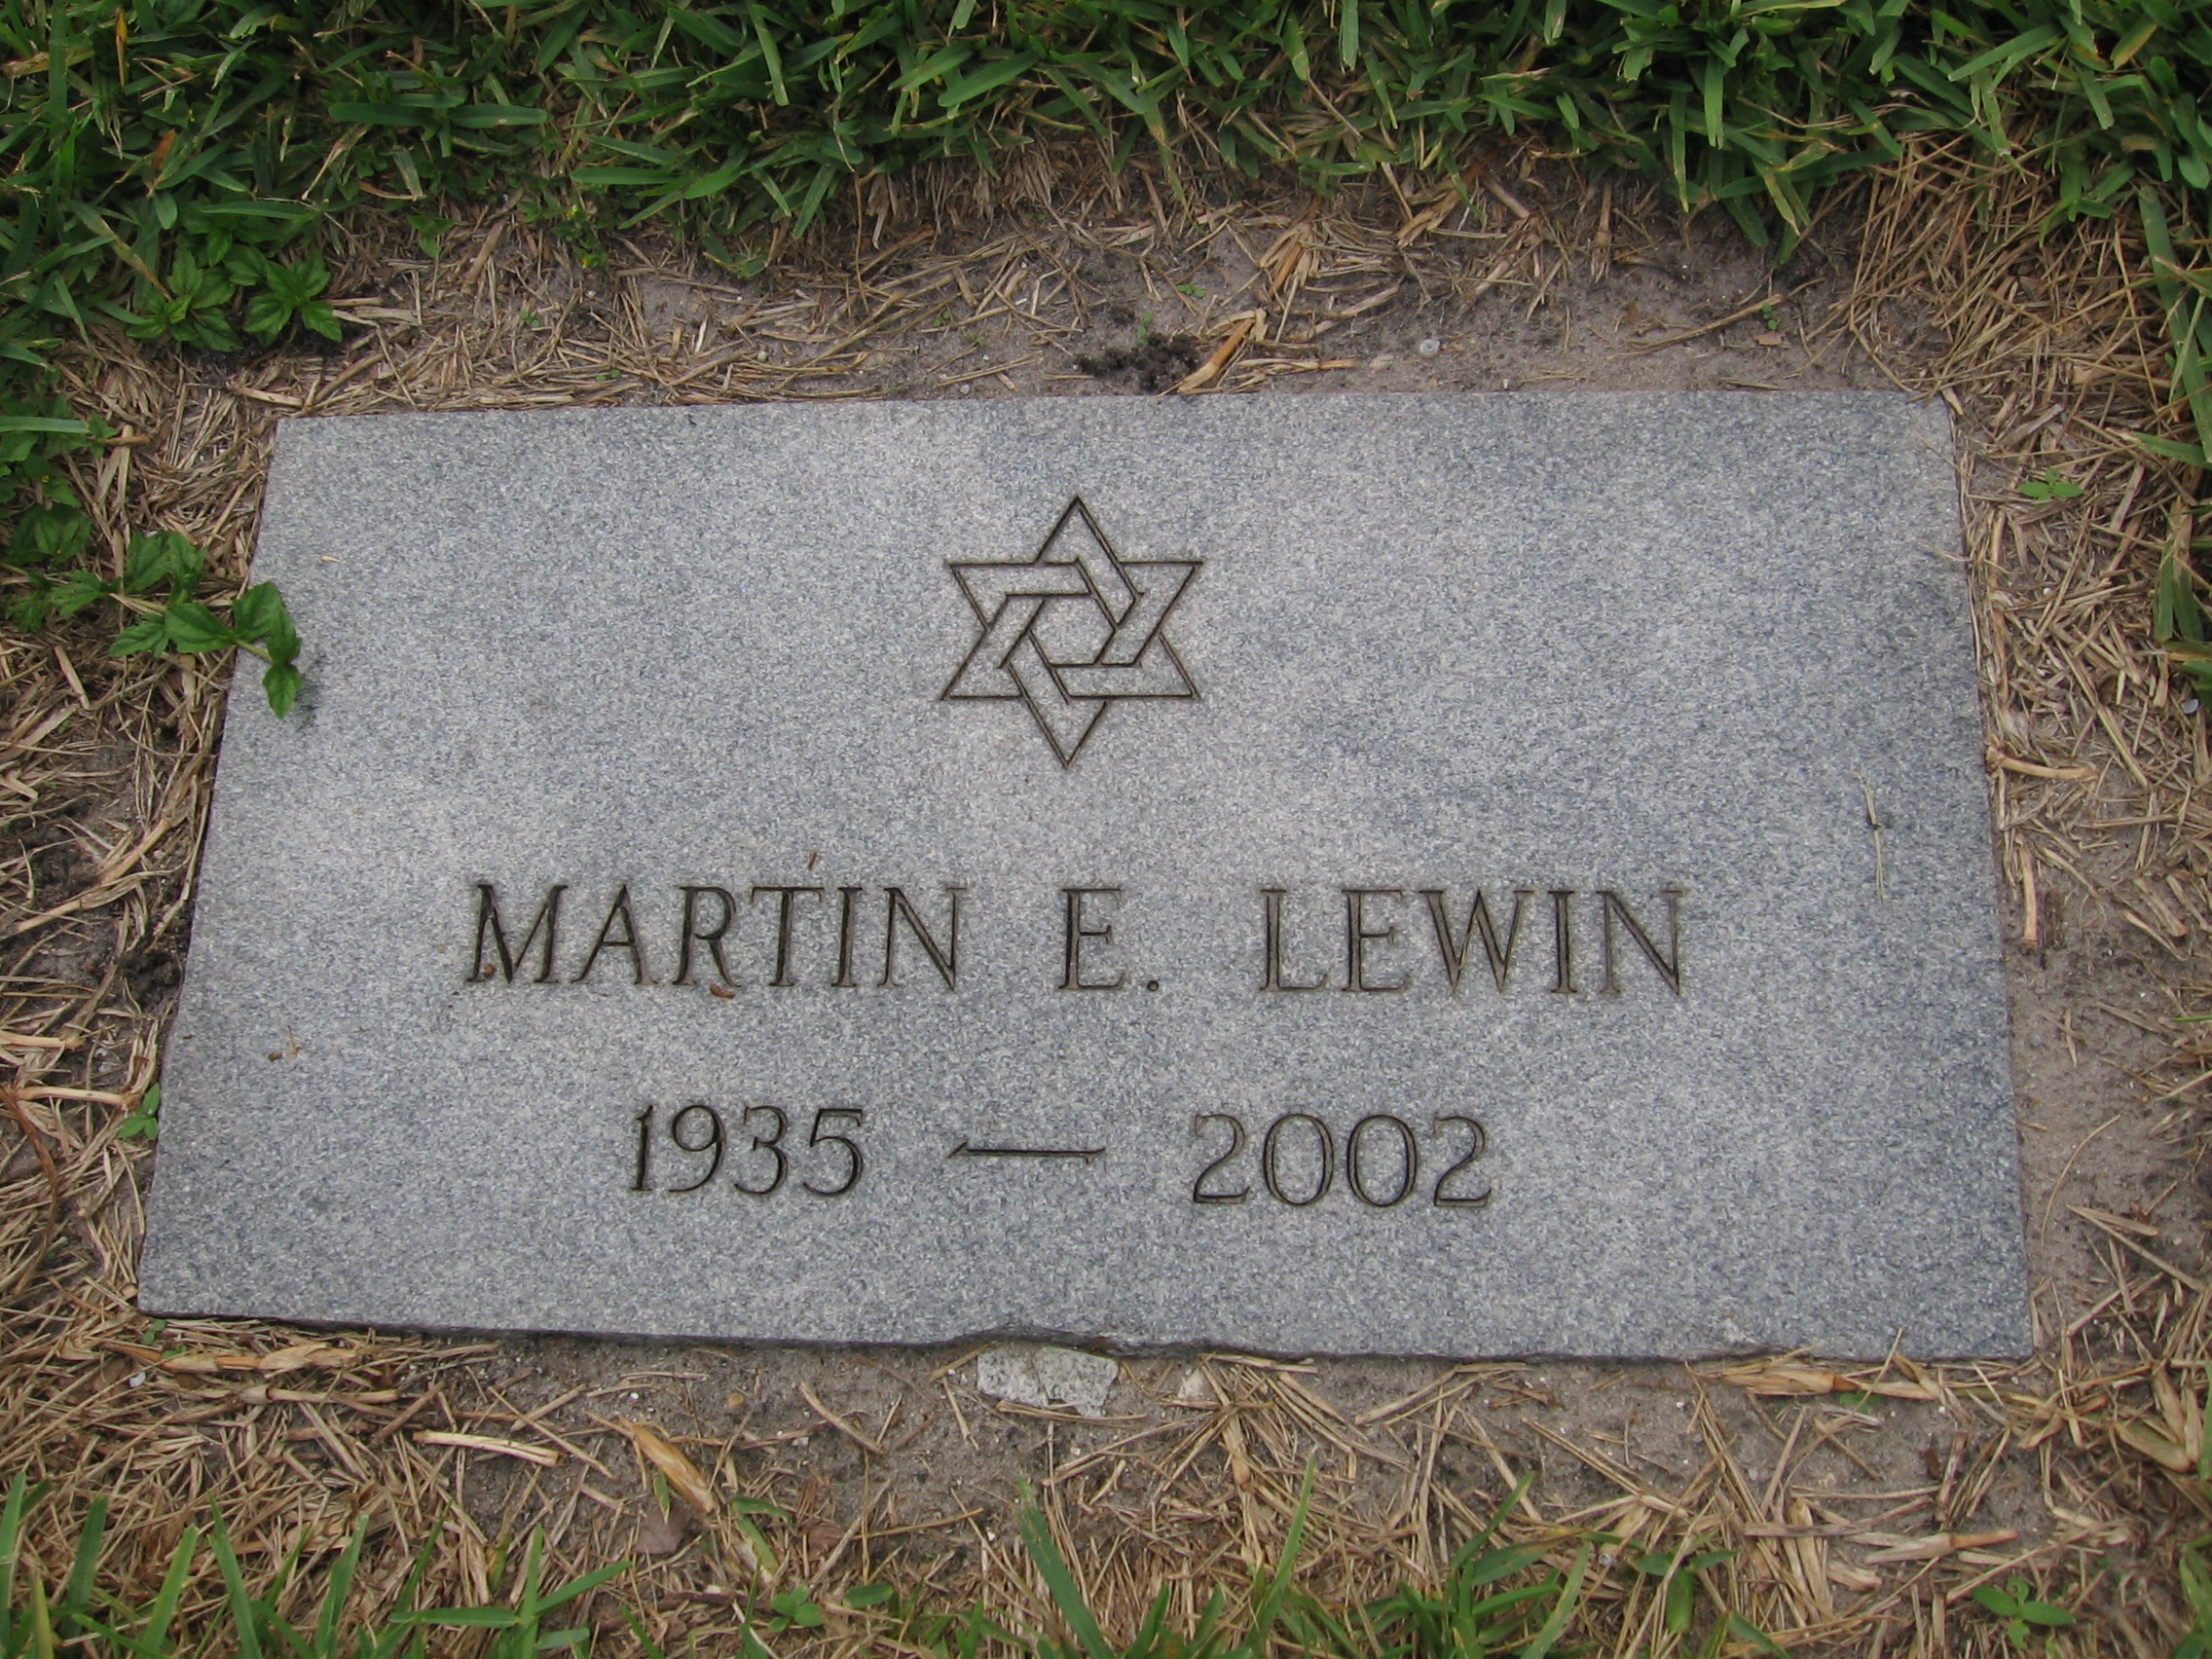 Martin E Lewin